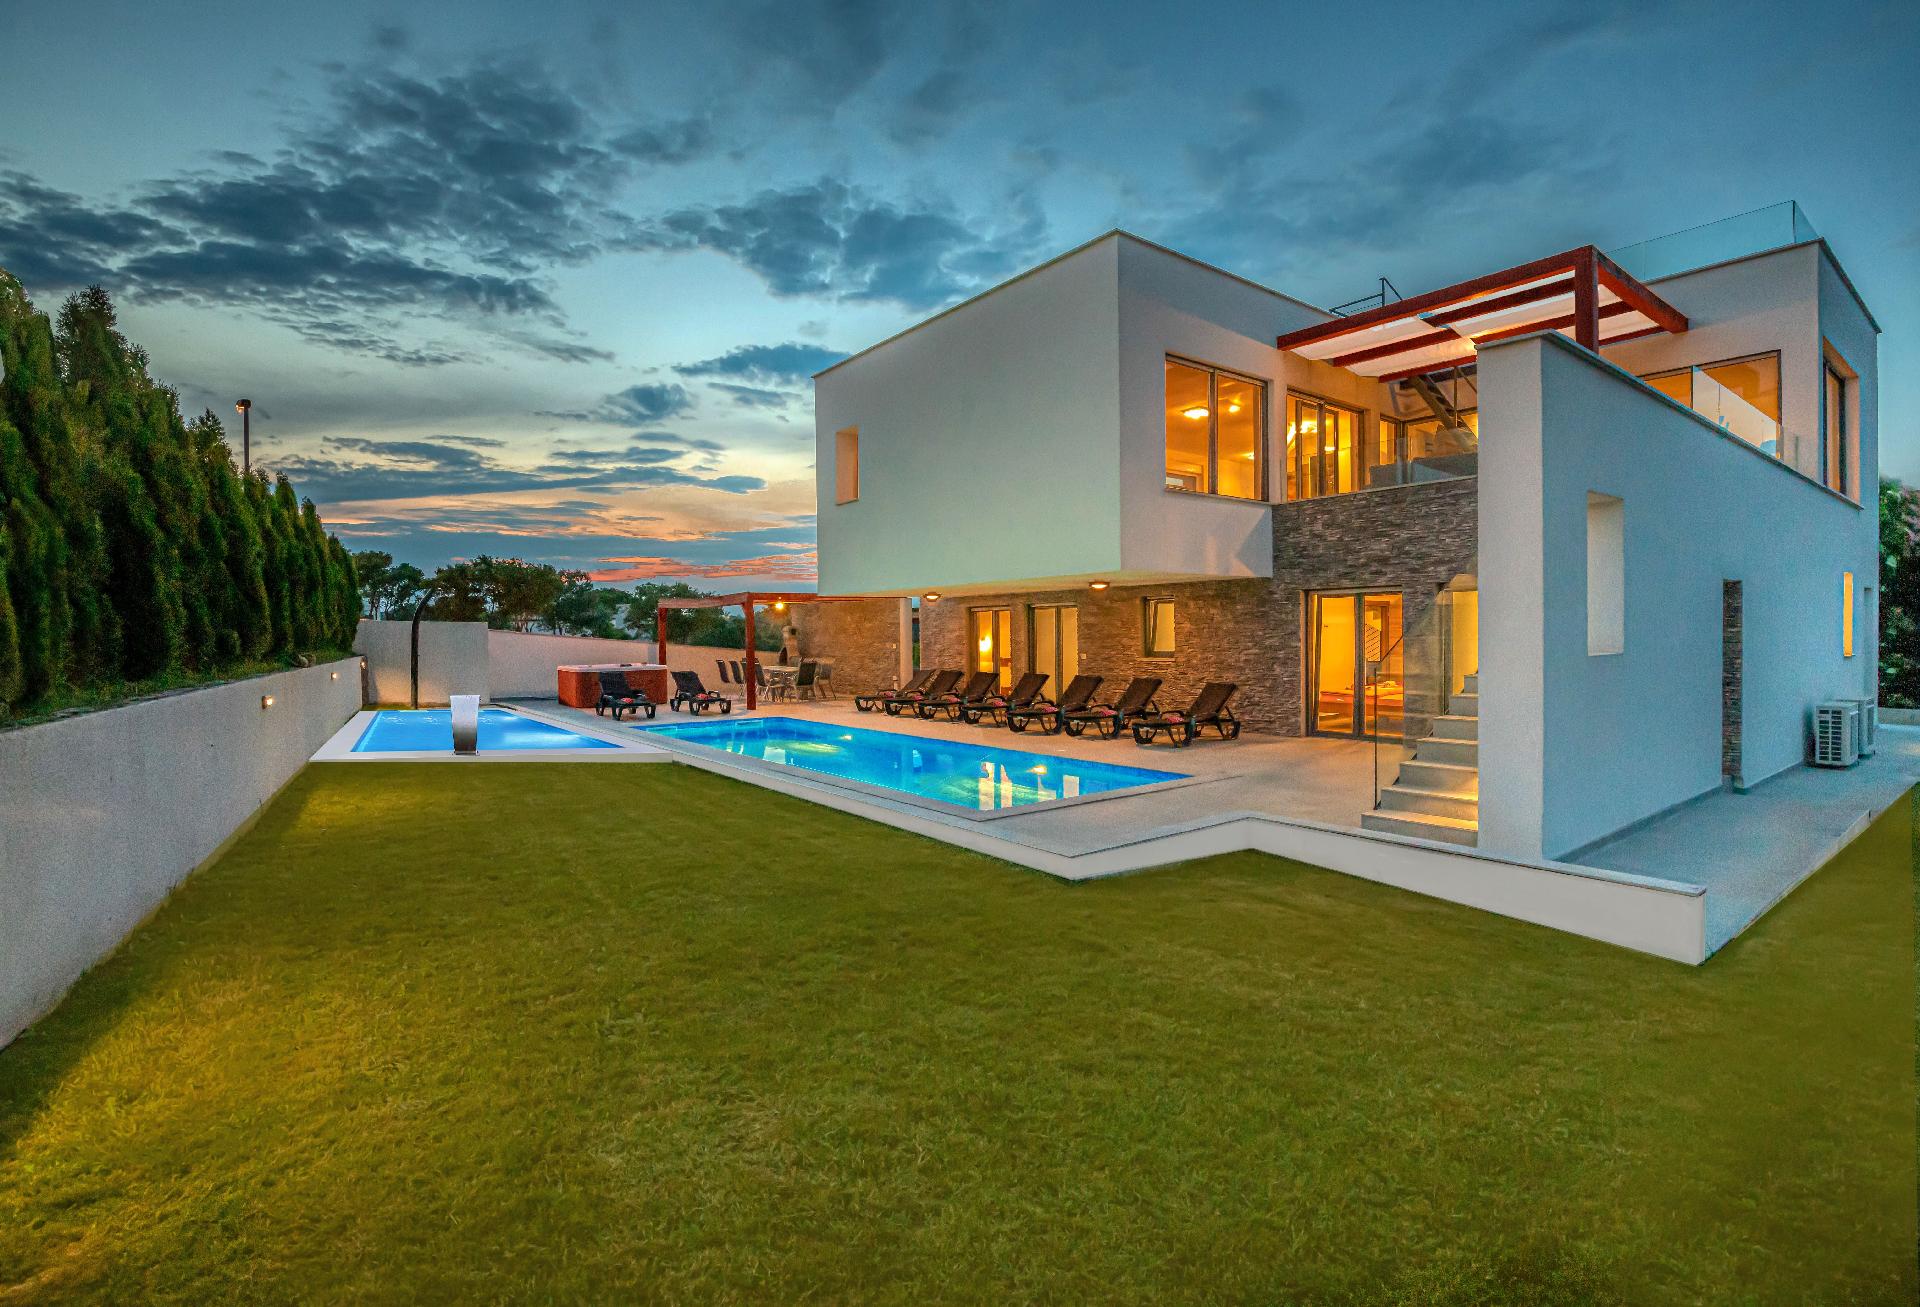 Leons Holiday Homes Villa 3 am Meer mit 2 Pools Ferienhaus in Kroatien